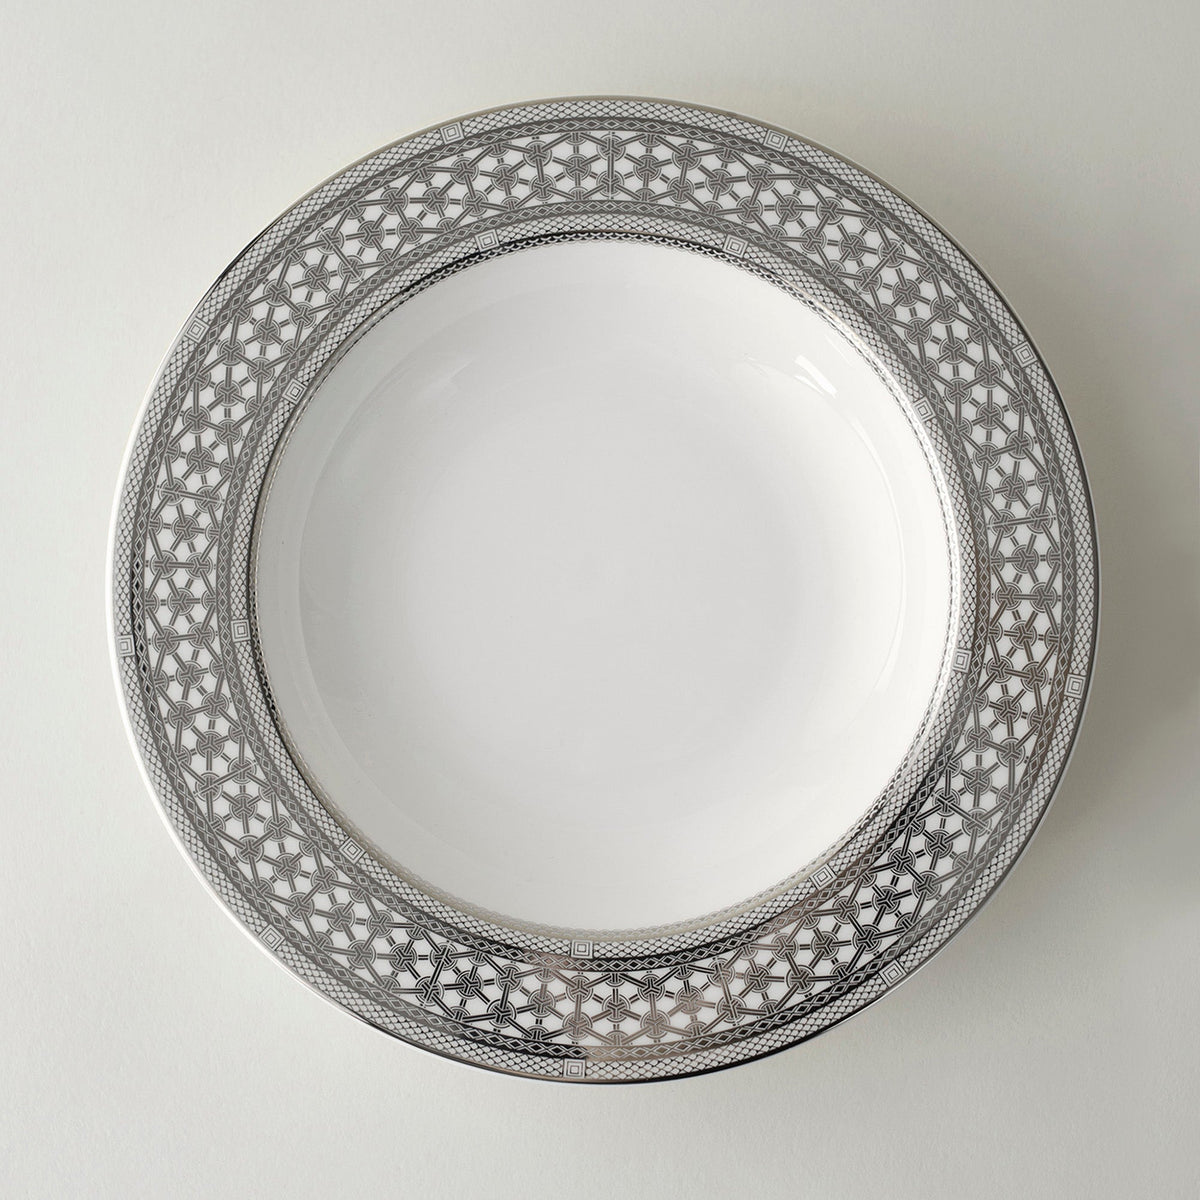 A Caskata Artisanal Home Hawthorne Ice Platinum Rimmed Soup Bowl with an elegant design on it.